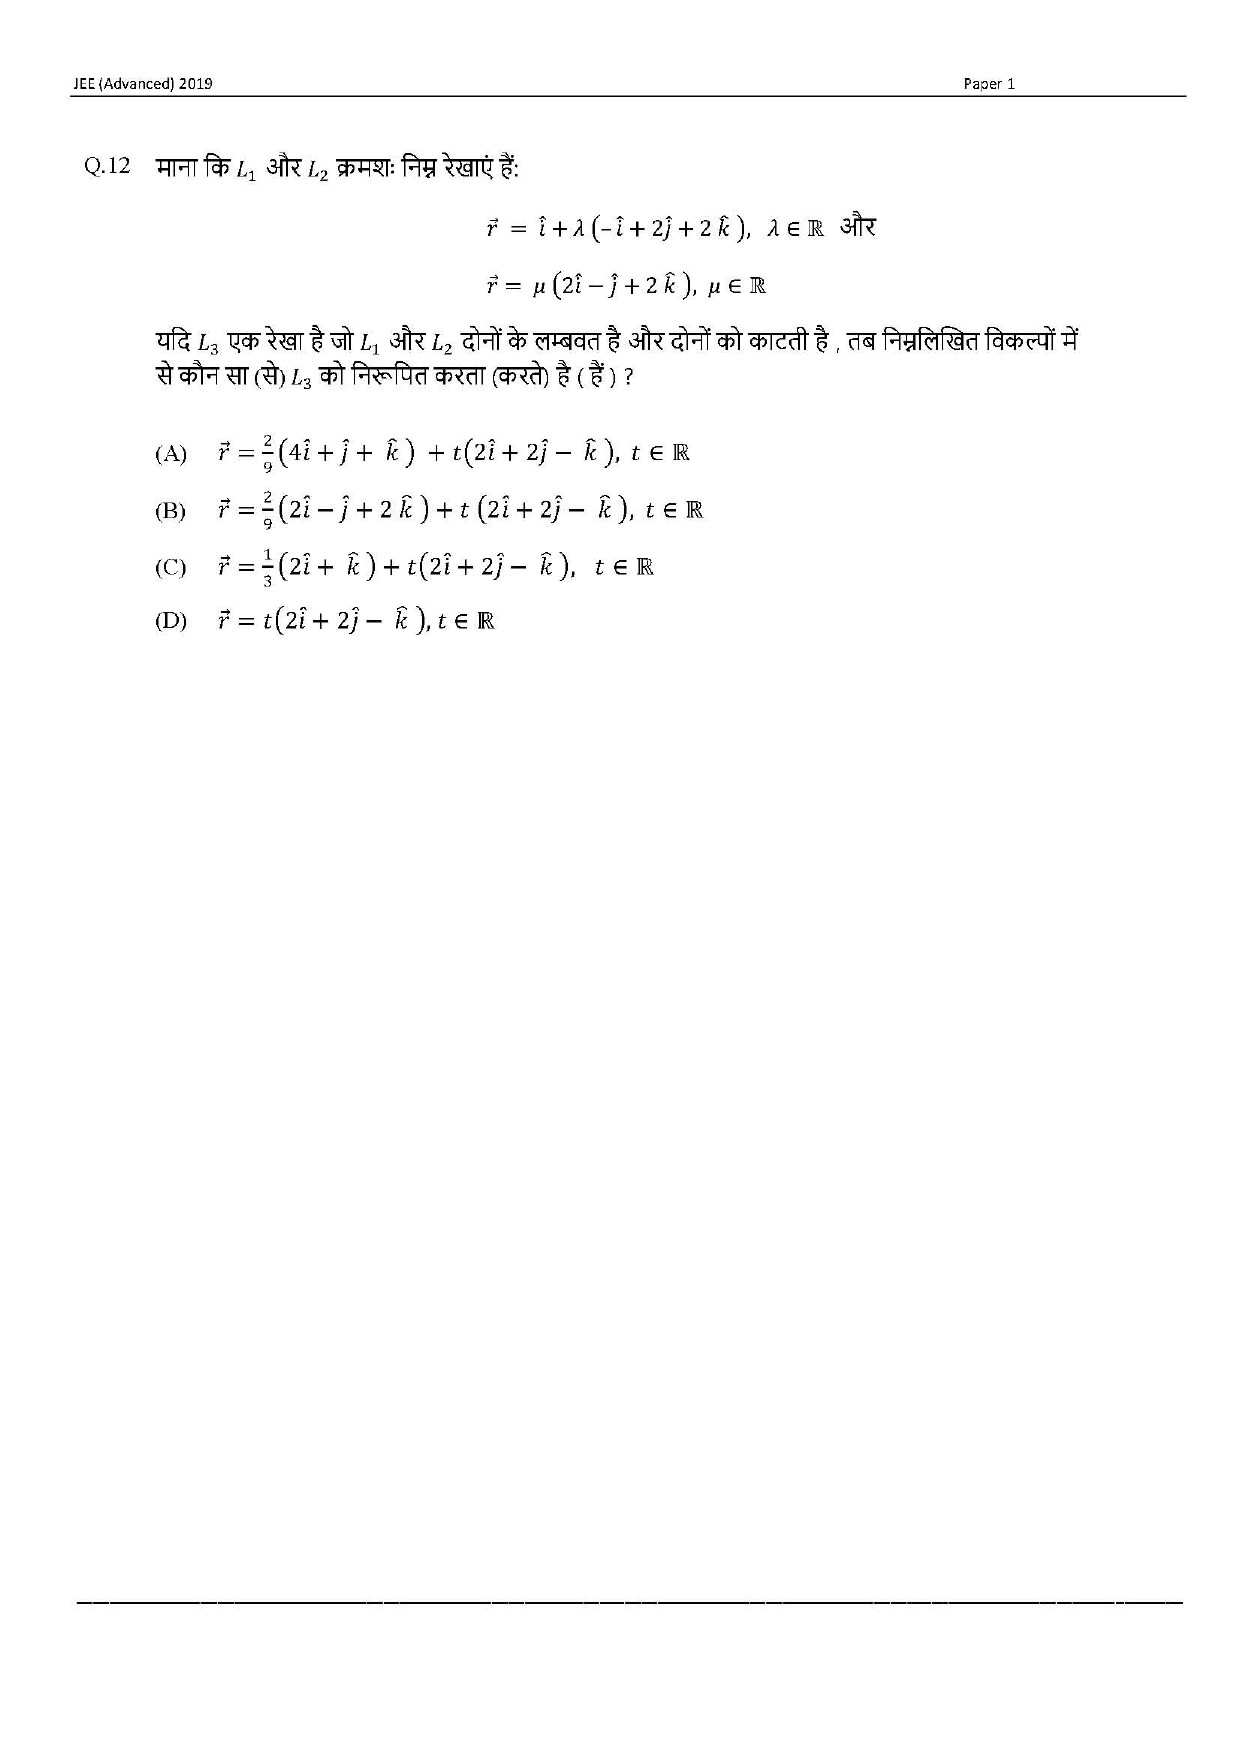 JEE Advanced Hindi Question Paper 2019 Paper 1 Mathematics 7